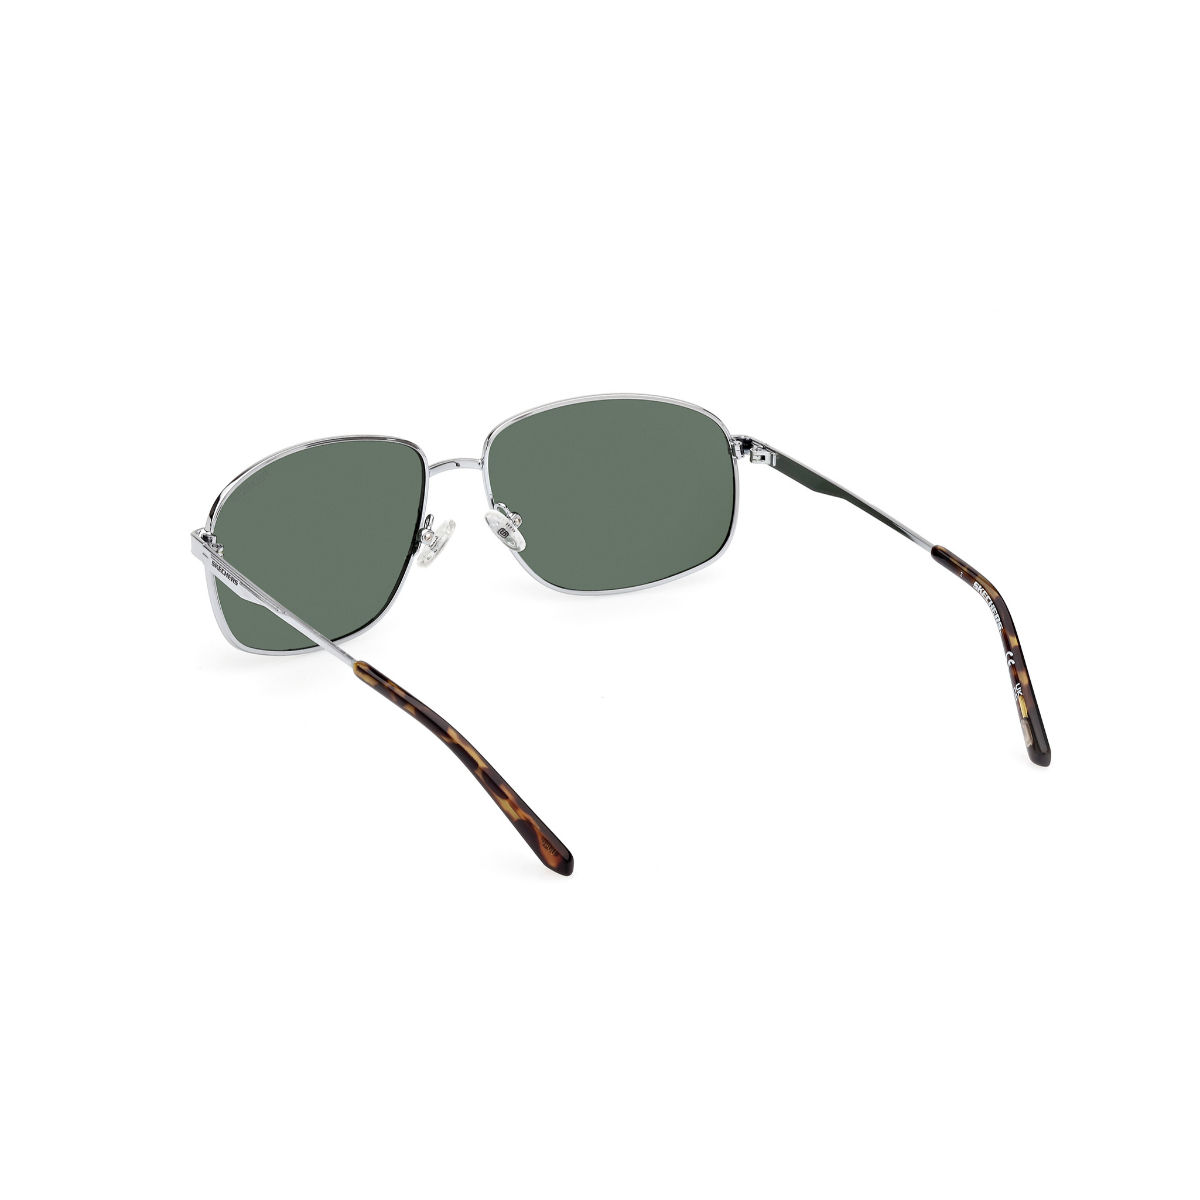 Buy Swarovski Sunglasses Silver Metal Sunglasses SK0353 57 32B Online